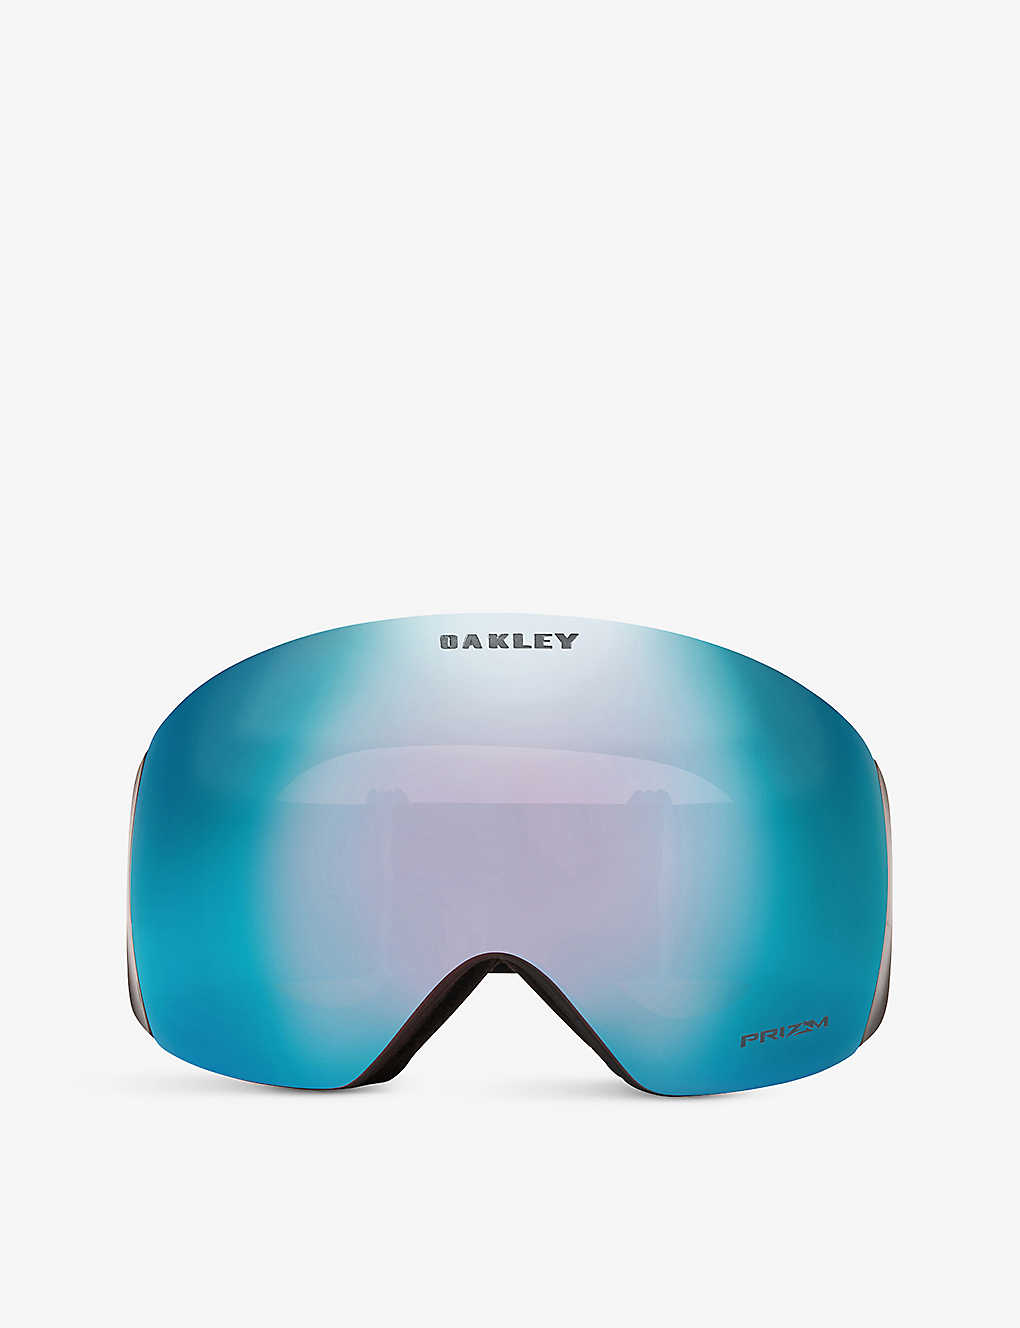 Shop Oakley Womens Black Oo7050 00 Flight Deck Ski Goggles